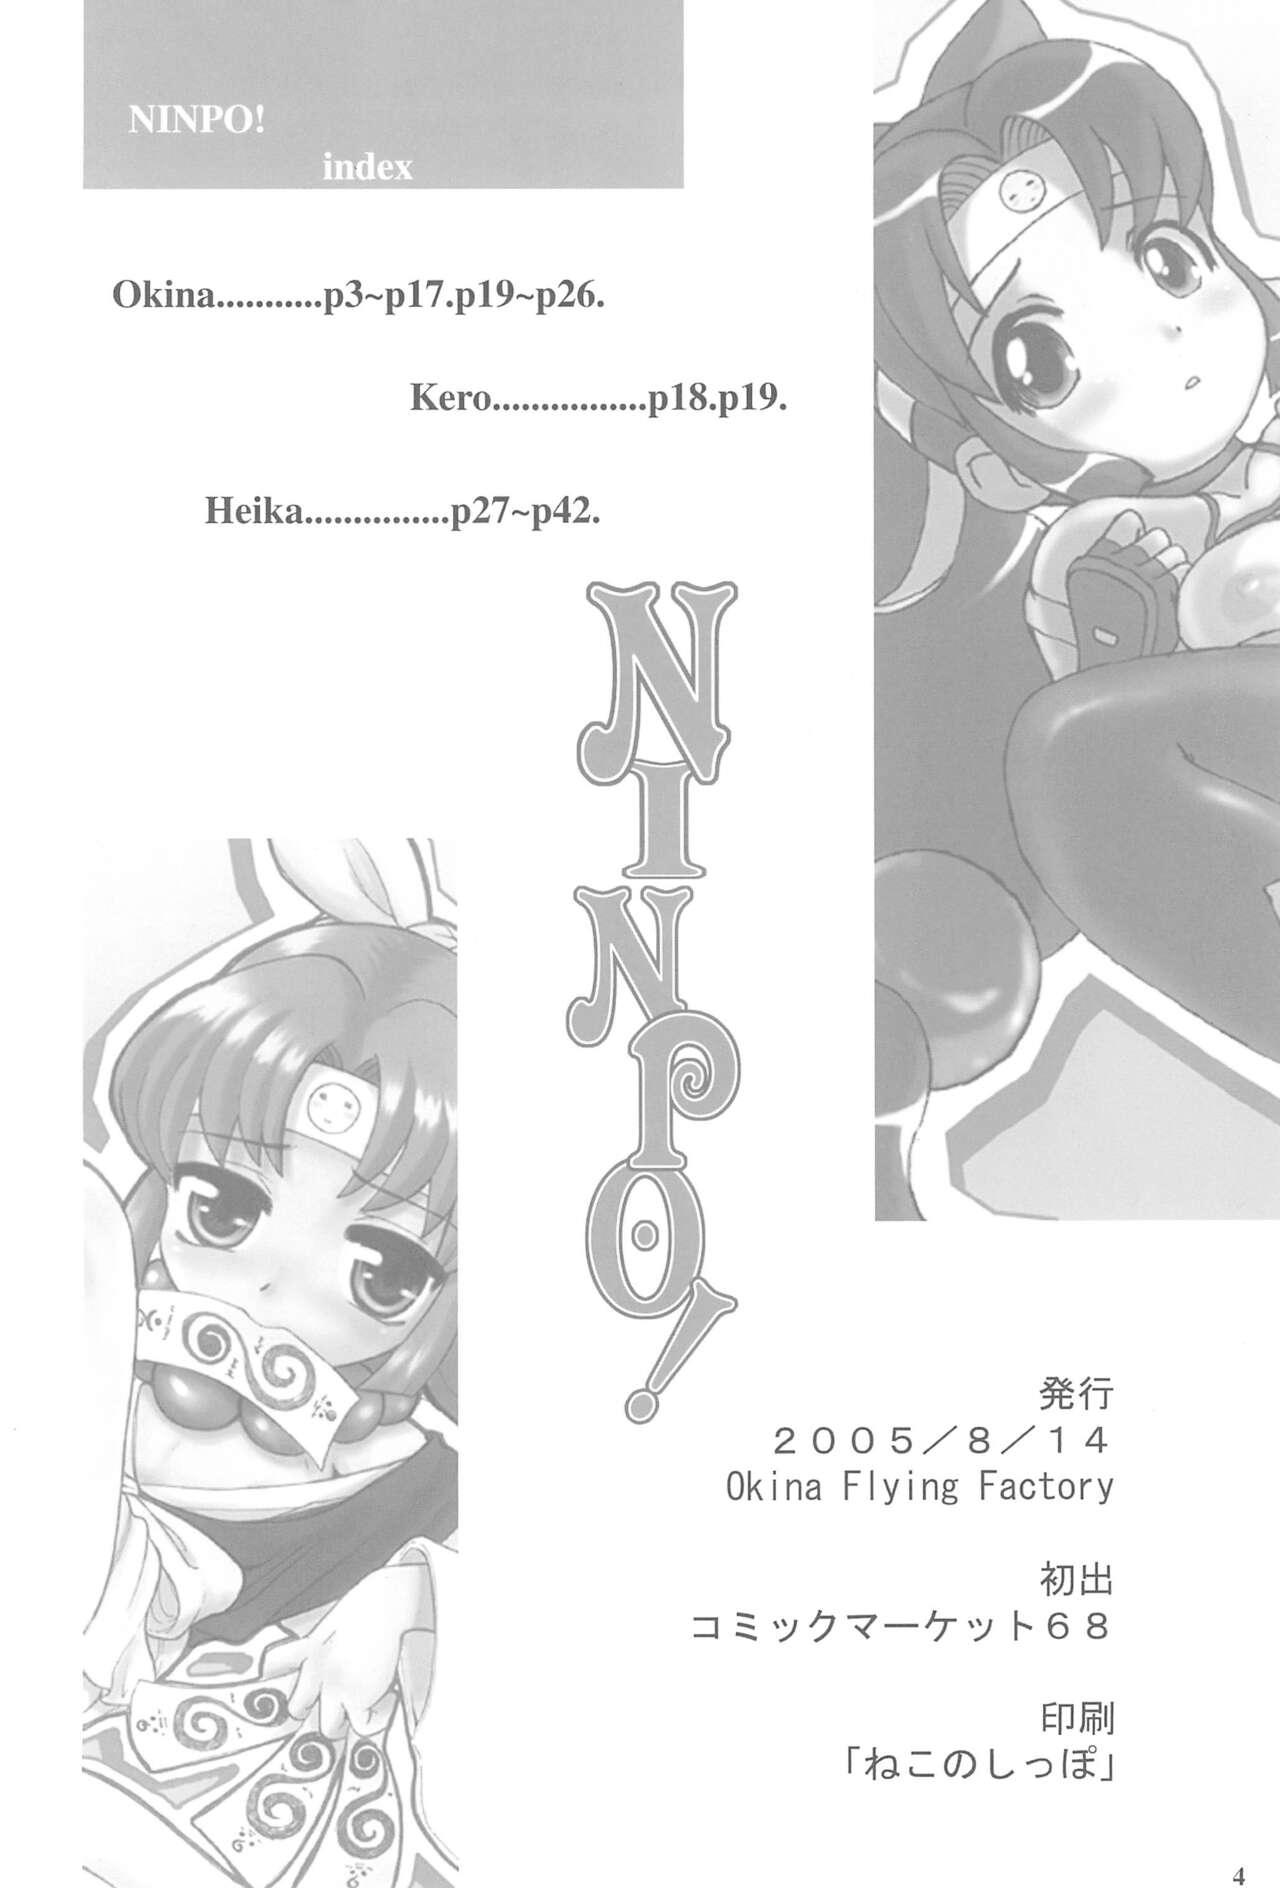 Forbidden NINPO! - 2x2 shinobuden | ninja nonsense Gaysex - Page 4